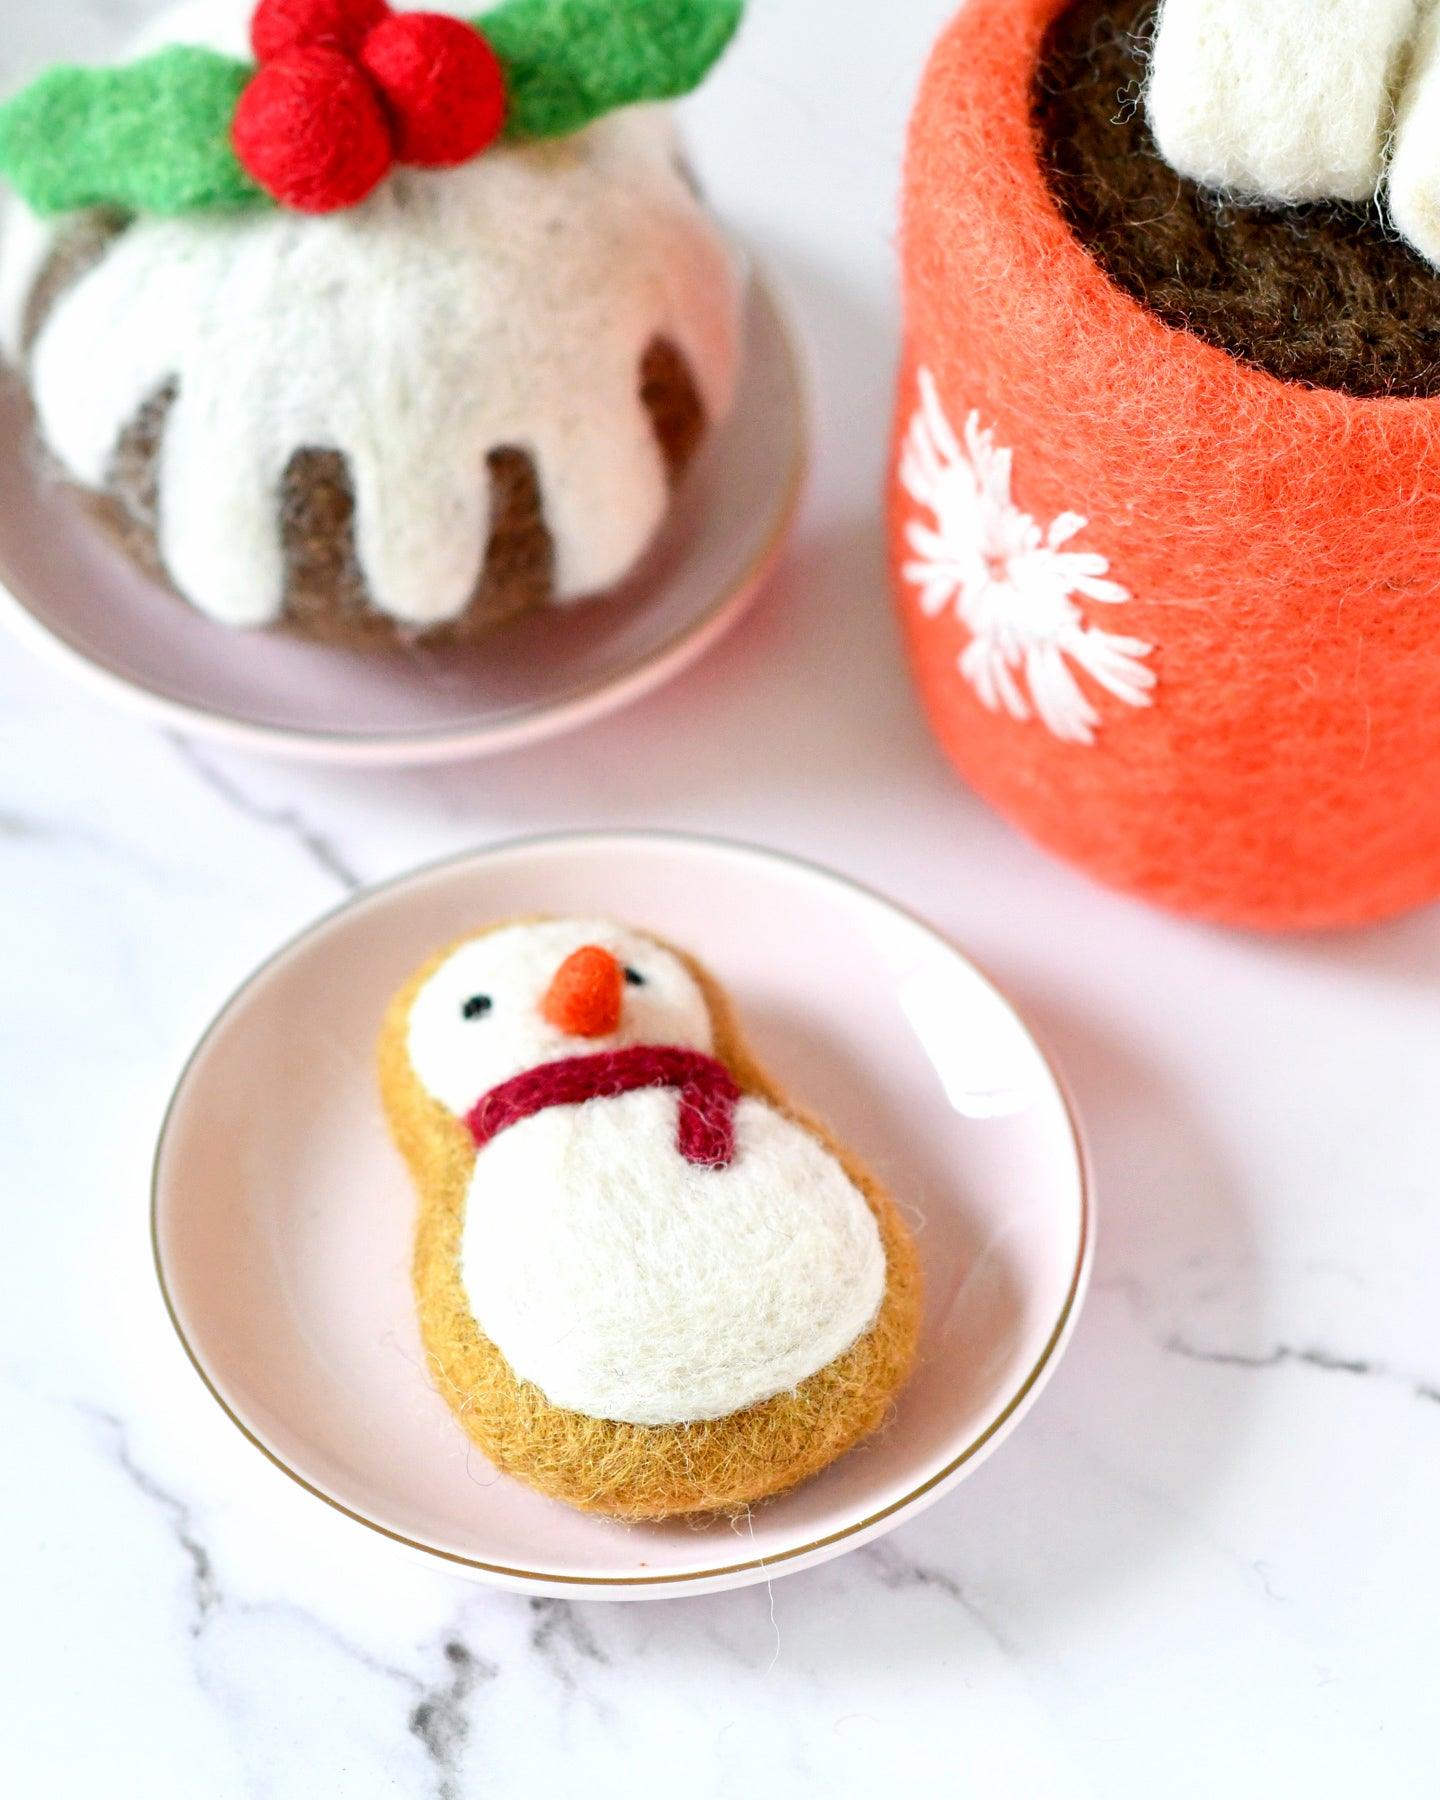 Felt Snowman Cookie - Tara Treasures